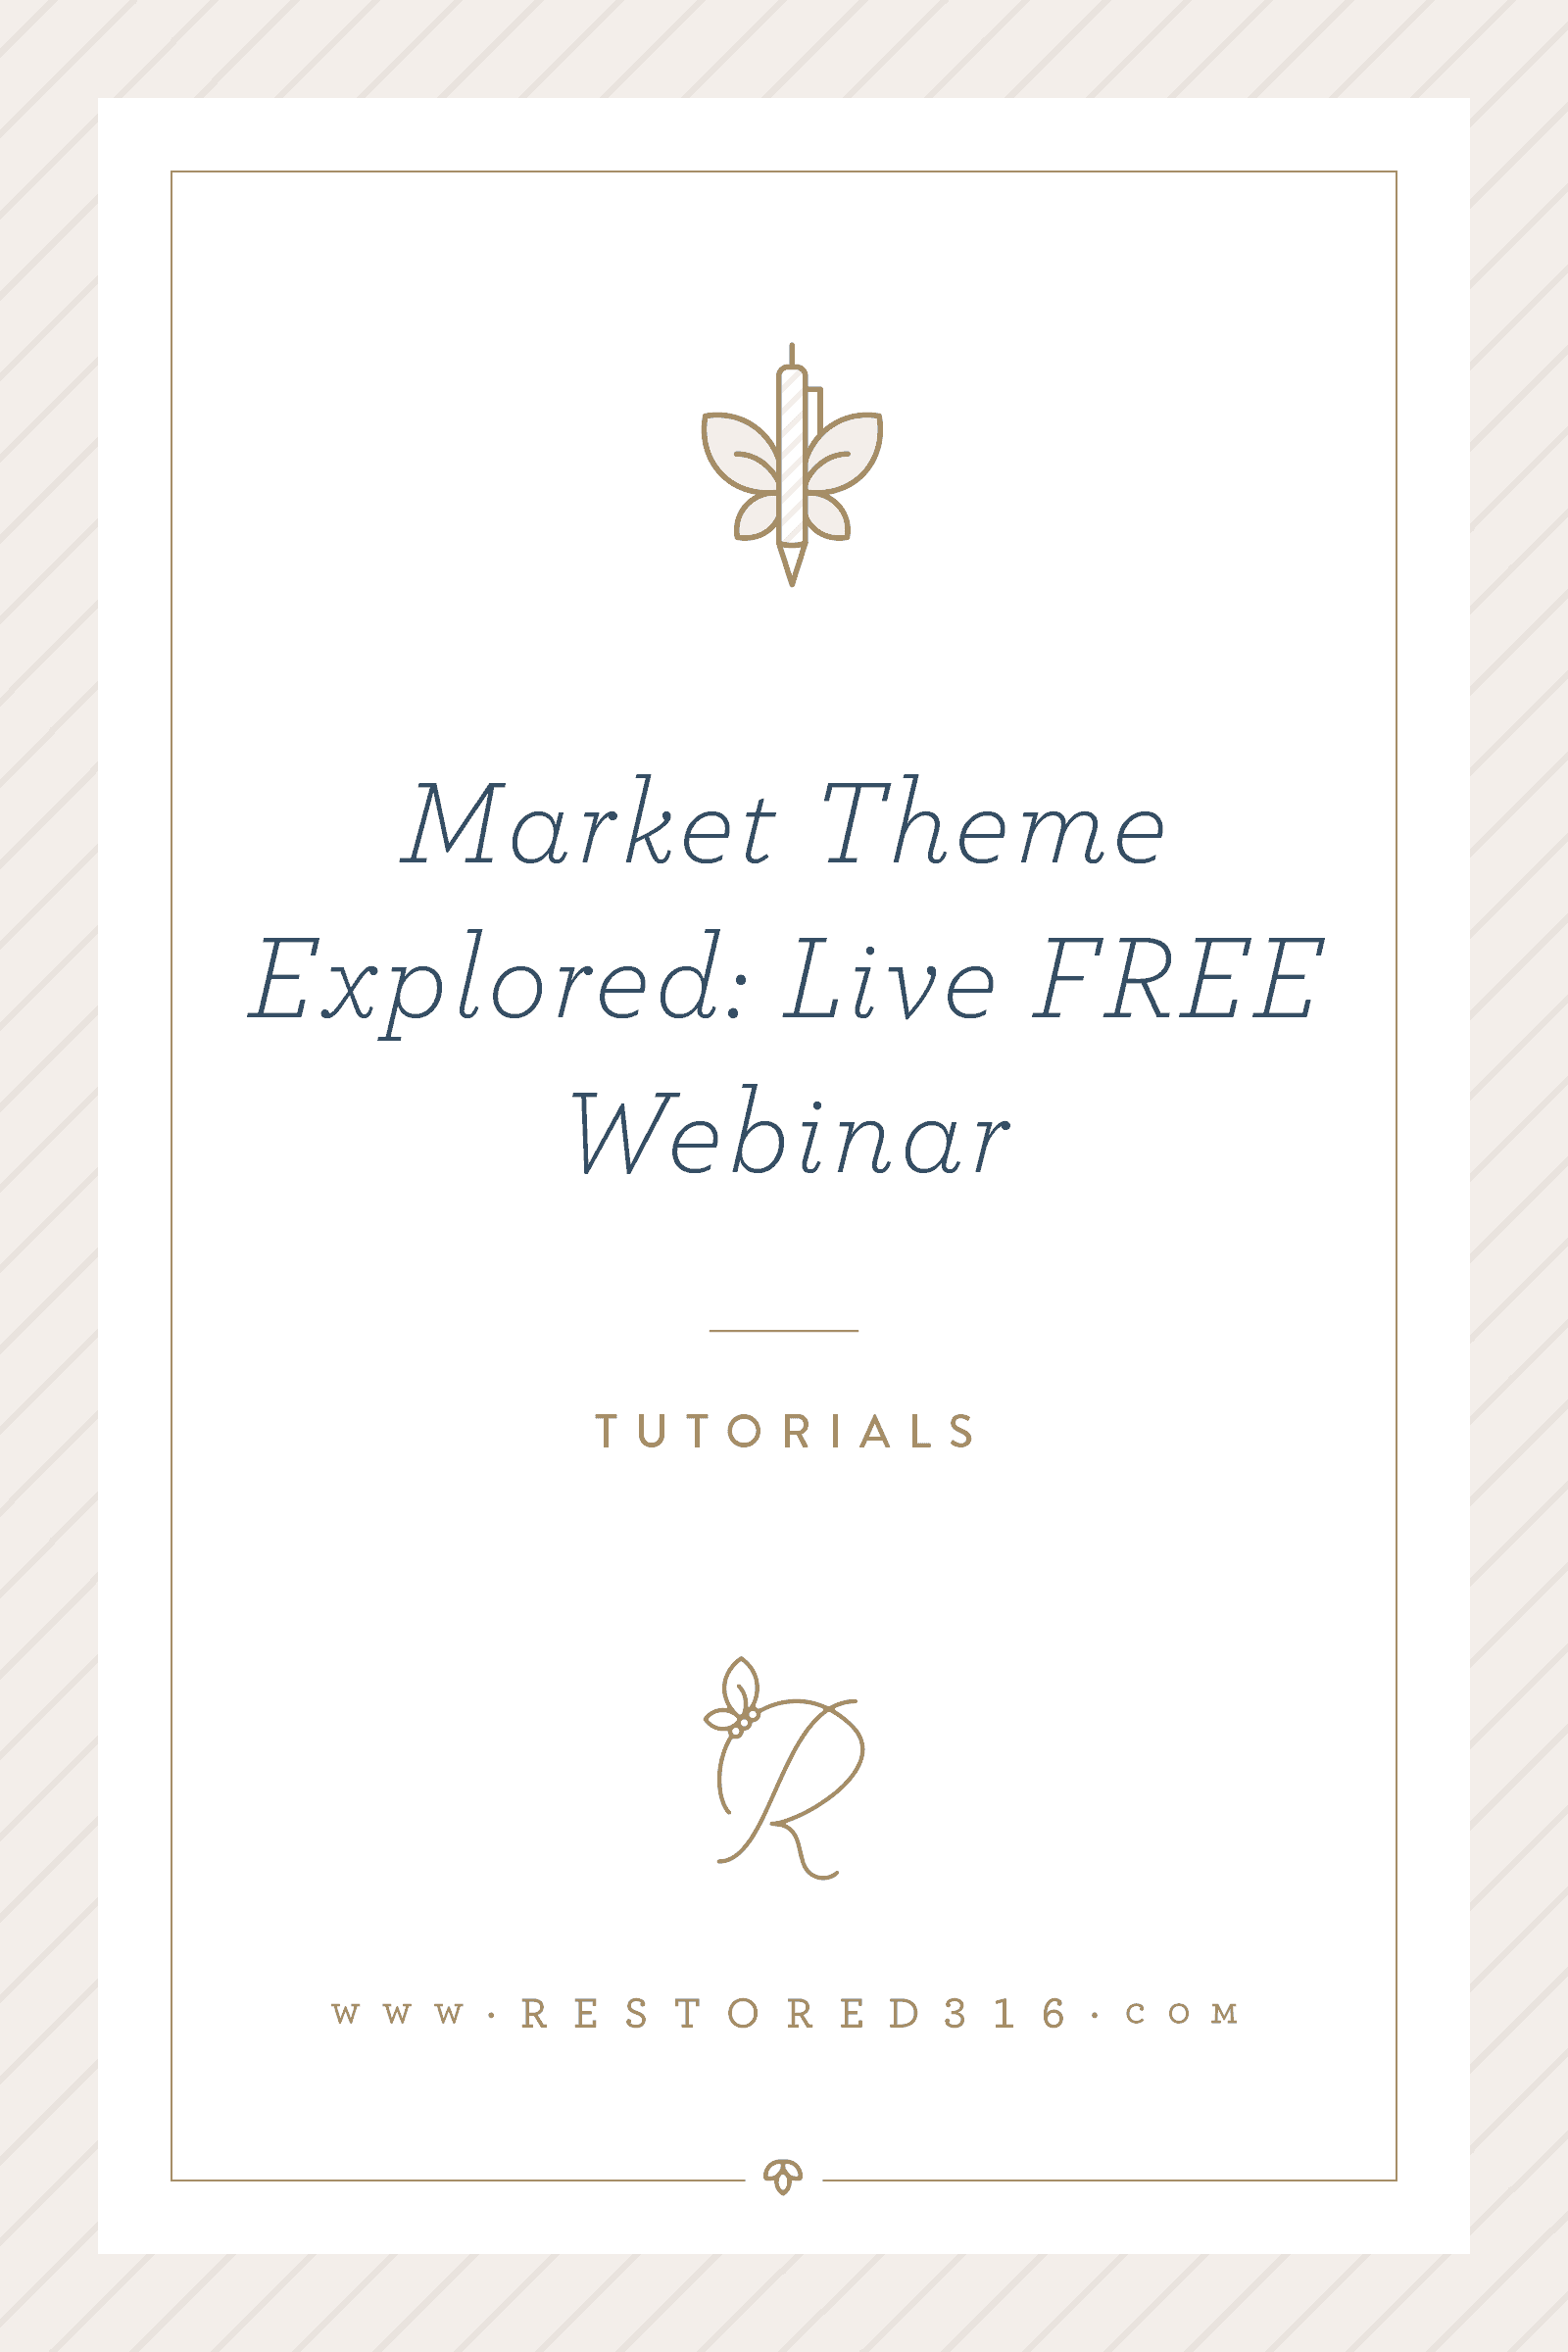 Market Theme Explored: Live FREE Webinar